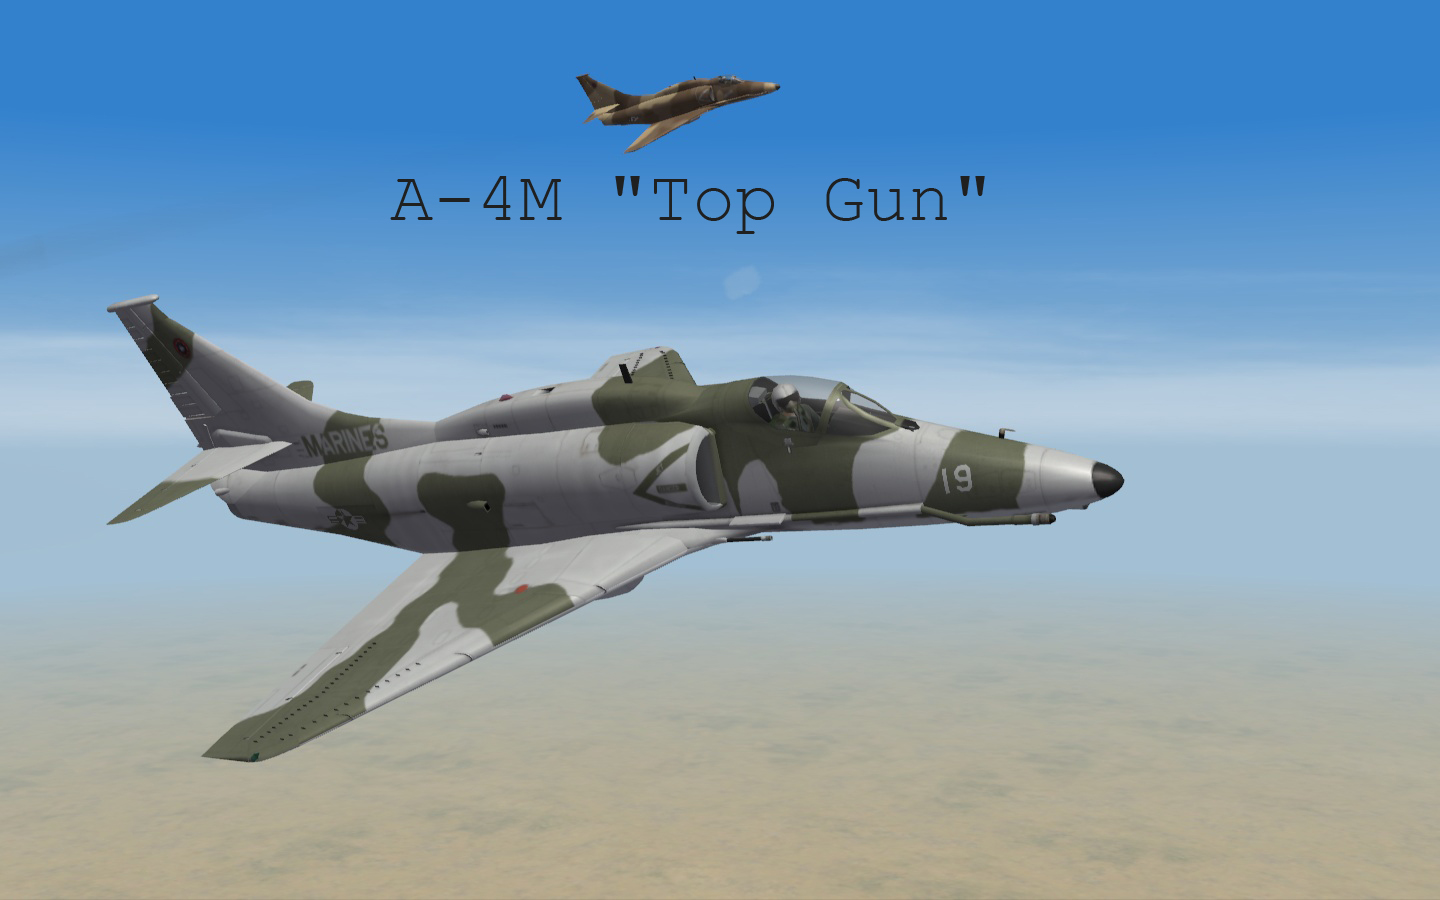 A-4M "Top Gun".